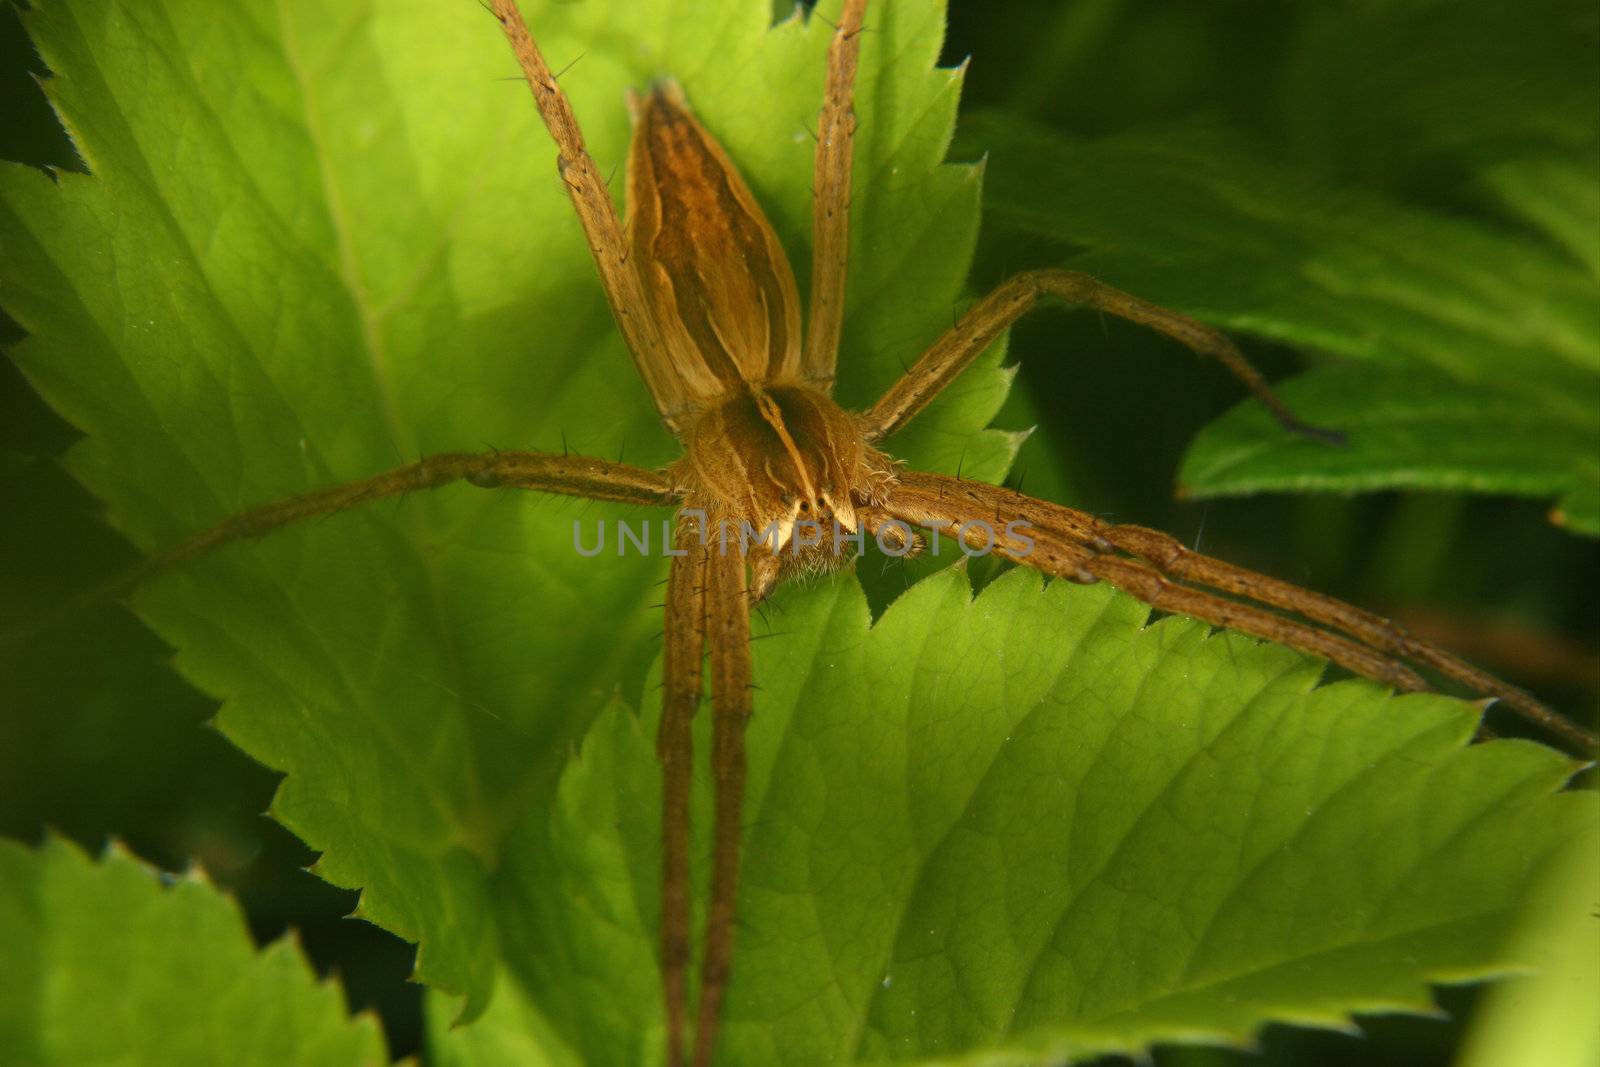 Nursery web spider (Pisaura mirabilis) on a leaf - Portrait